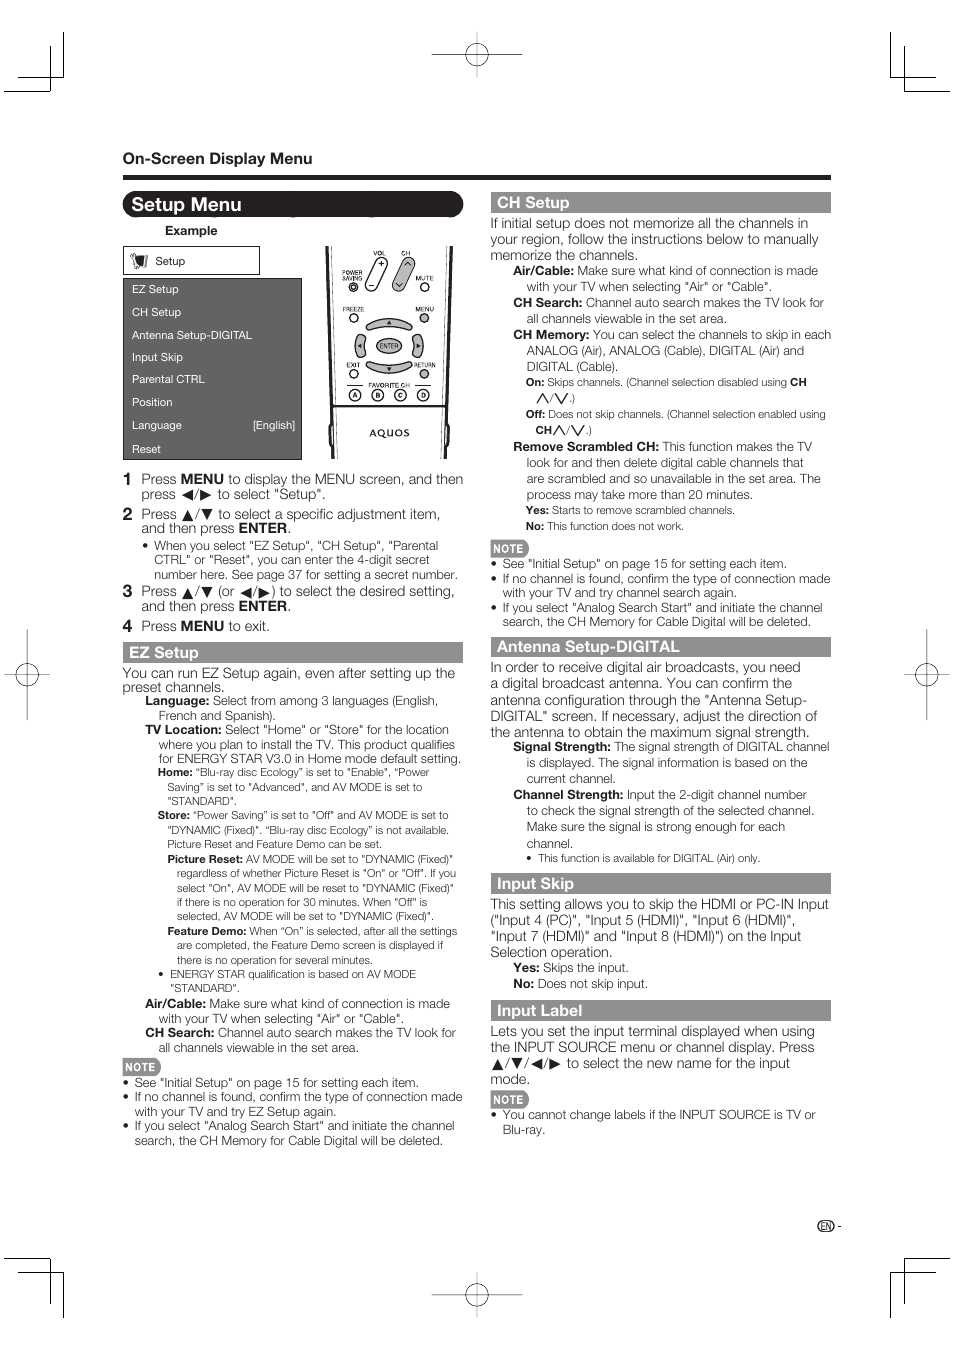 Setup menu, Ez setup, Ch setup | Antenna setup-digital, Input skip, Input label | Sharp Aquos LC 46BD80UN User Manual | Page 37 / 65